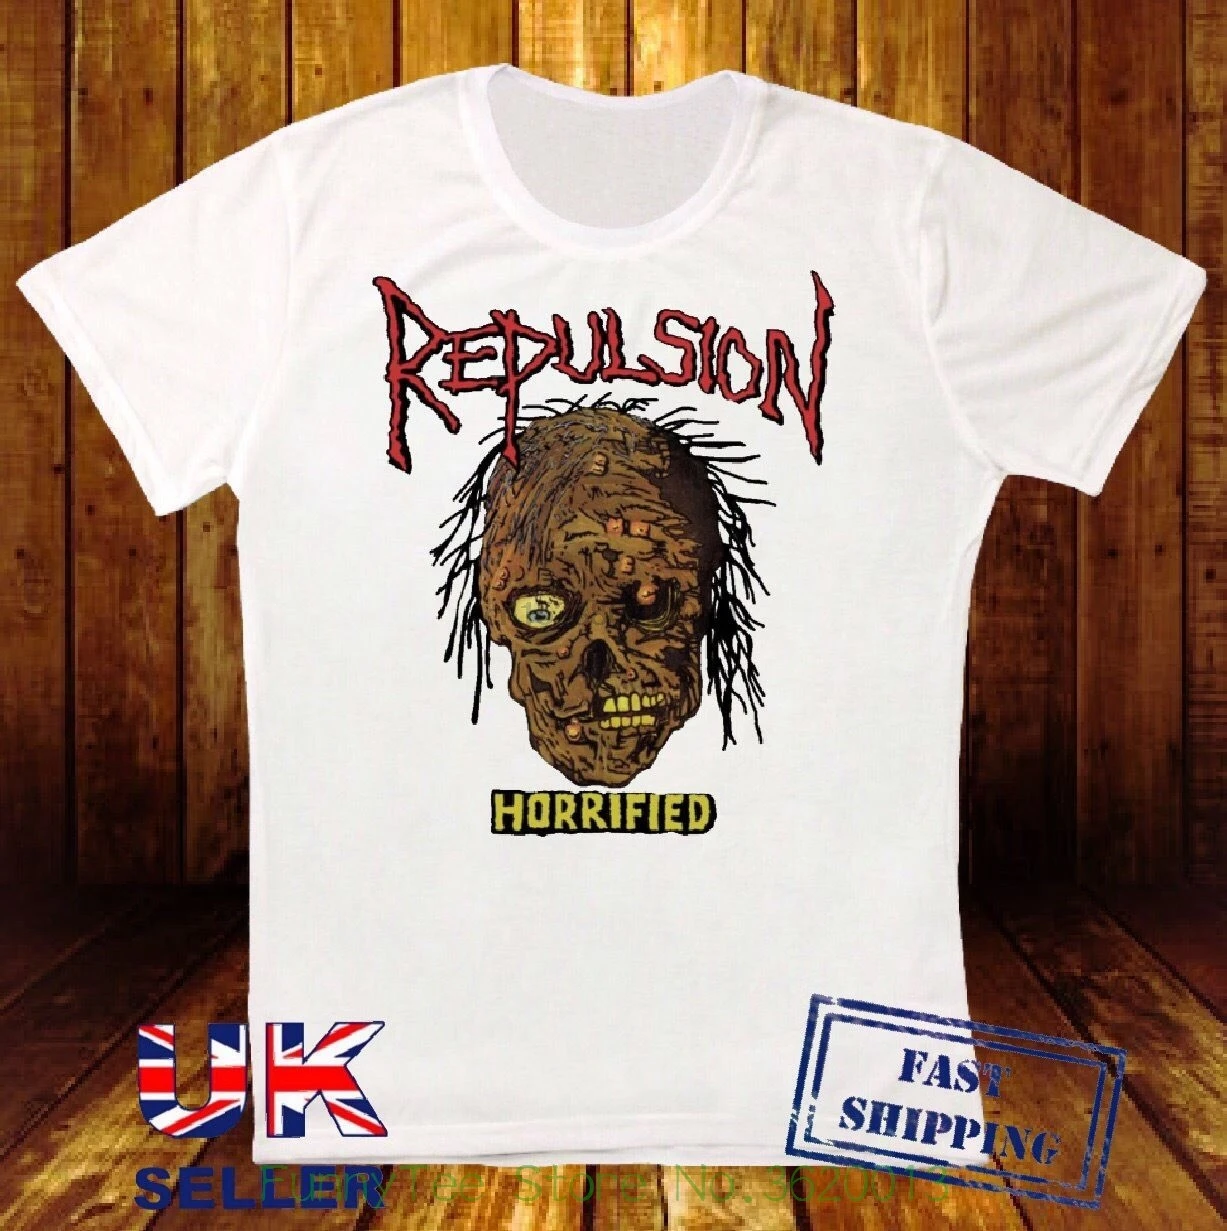 Repulsion Horrified 86 Death Metal Grindcore Carcass Nuevo Blanco Camiseta  232|T-Shirts| - AliExpress